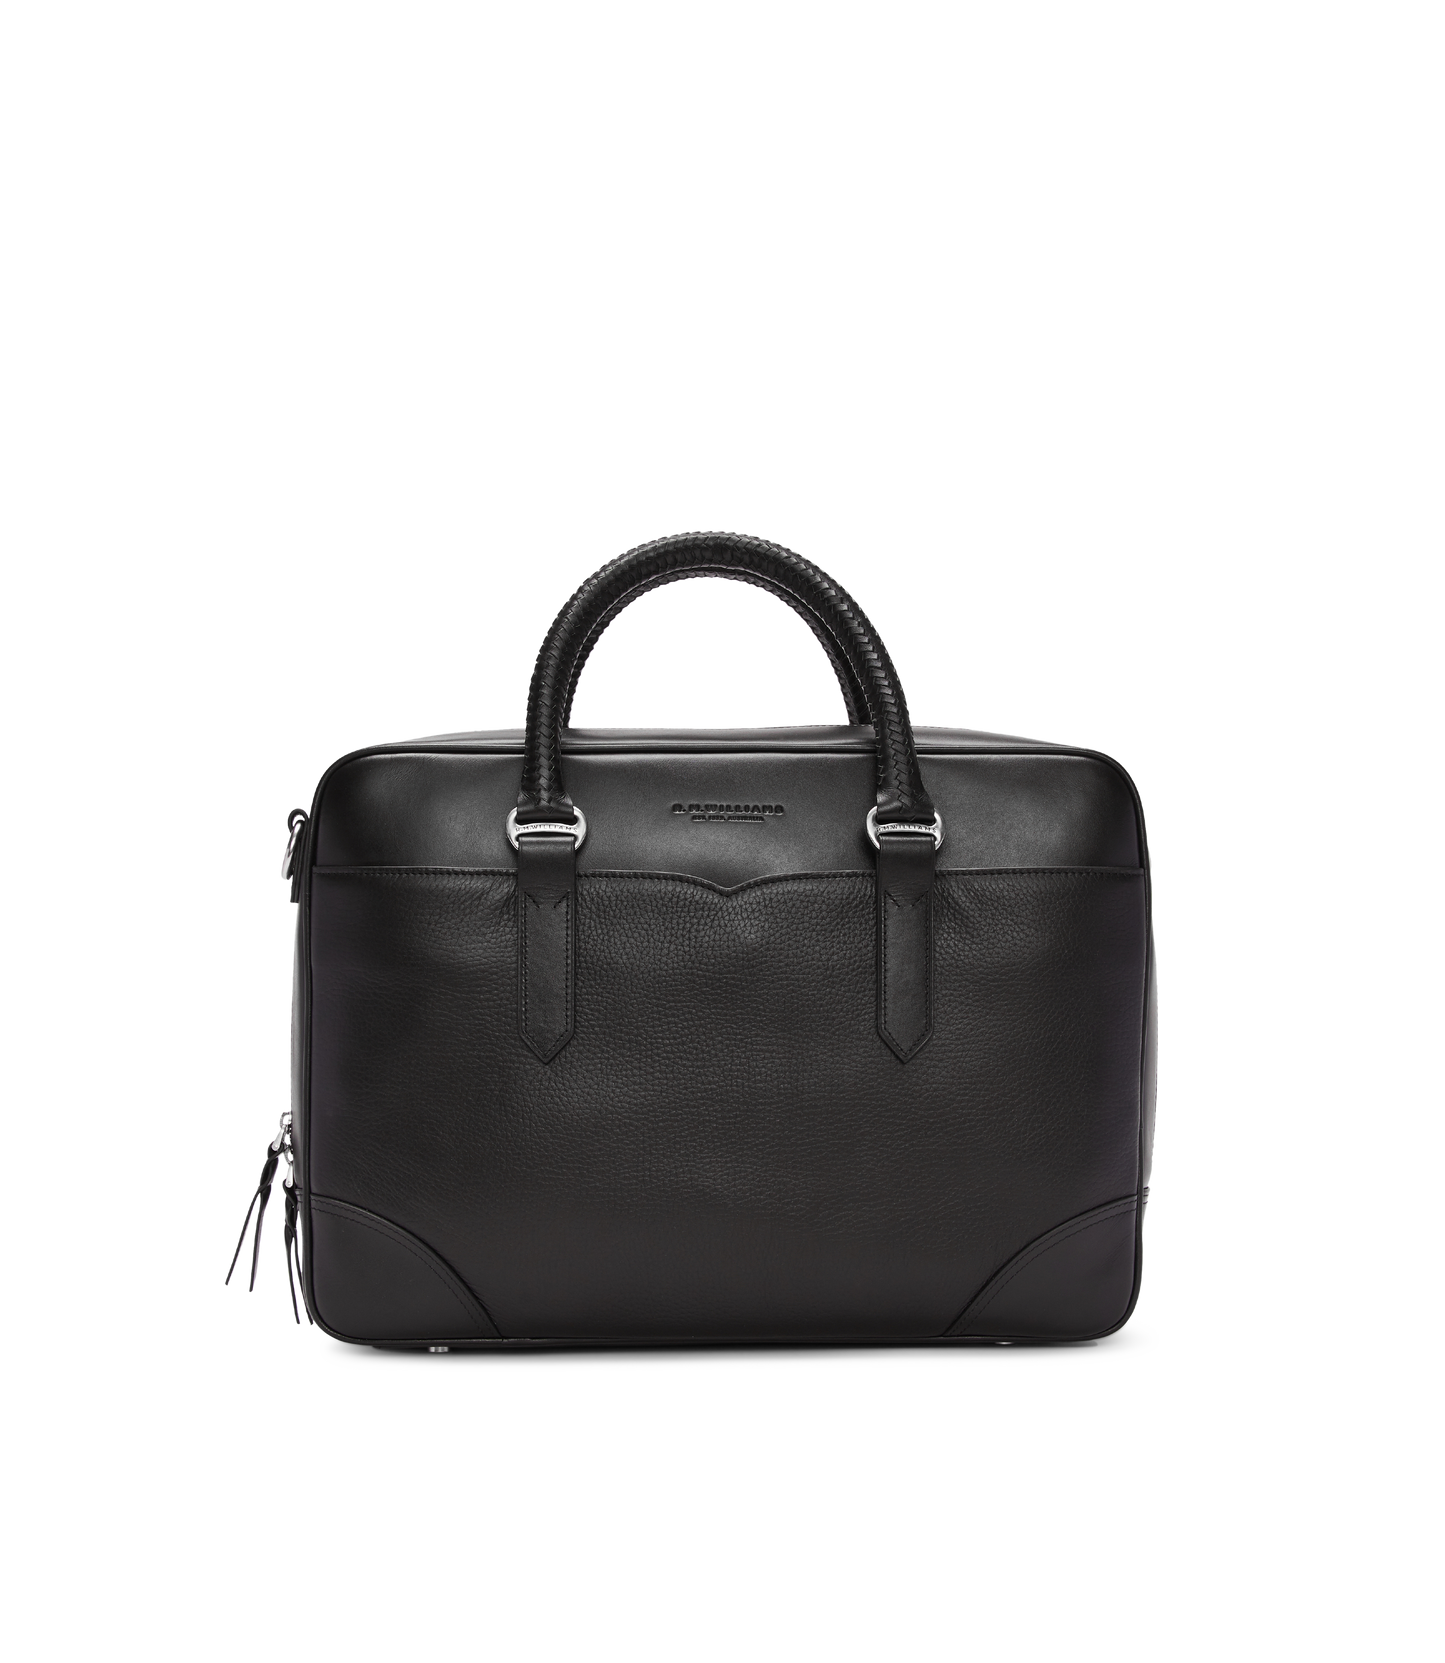 R.M.Williams briefcase